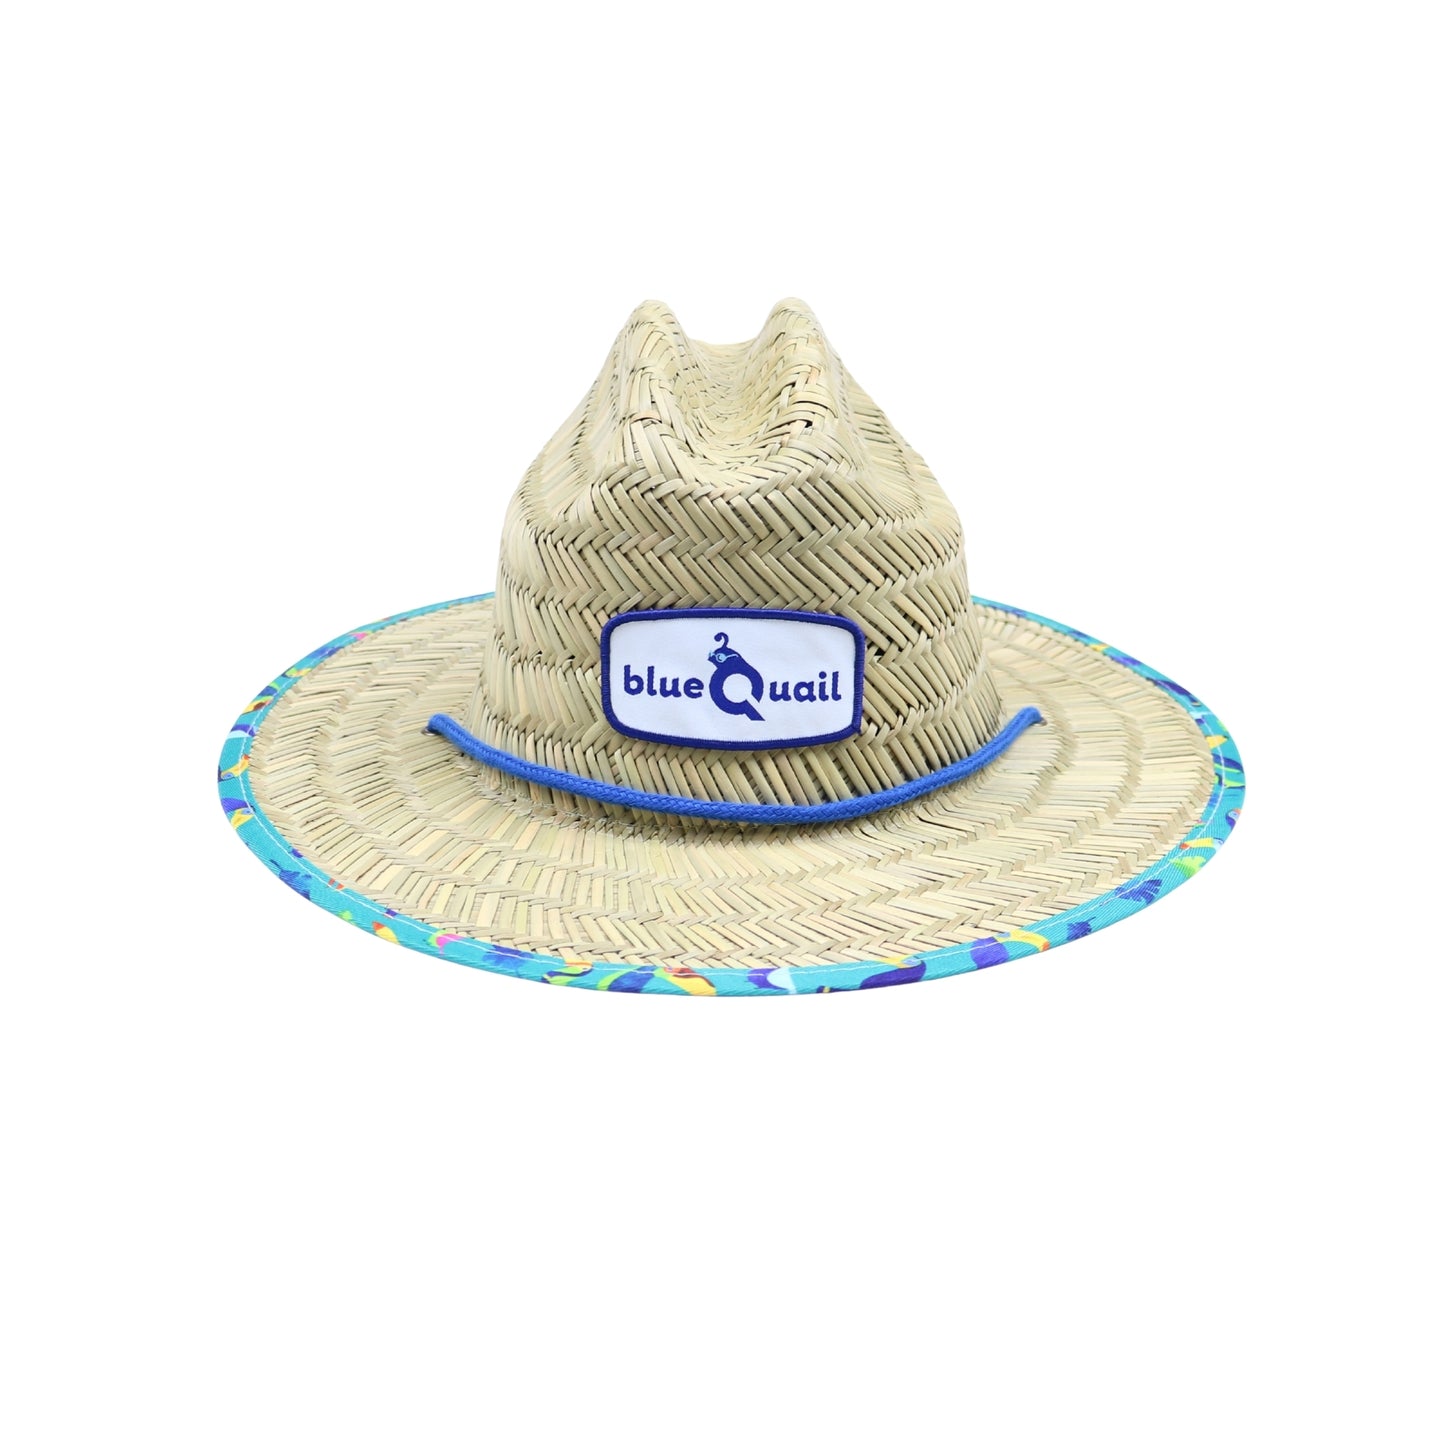 Toucans Straw Beach Hat